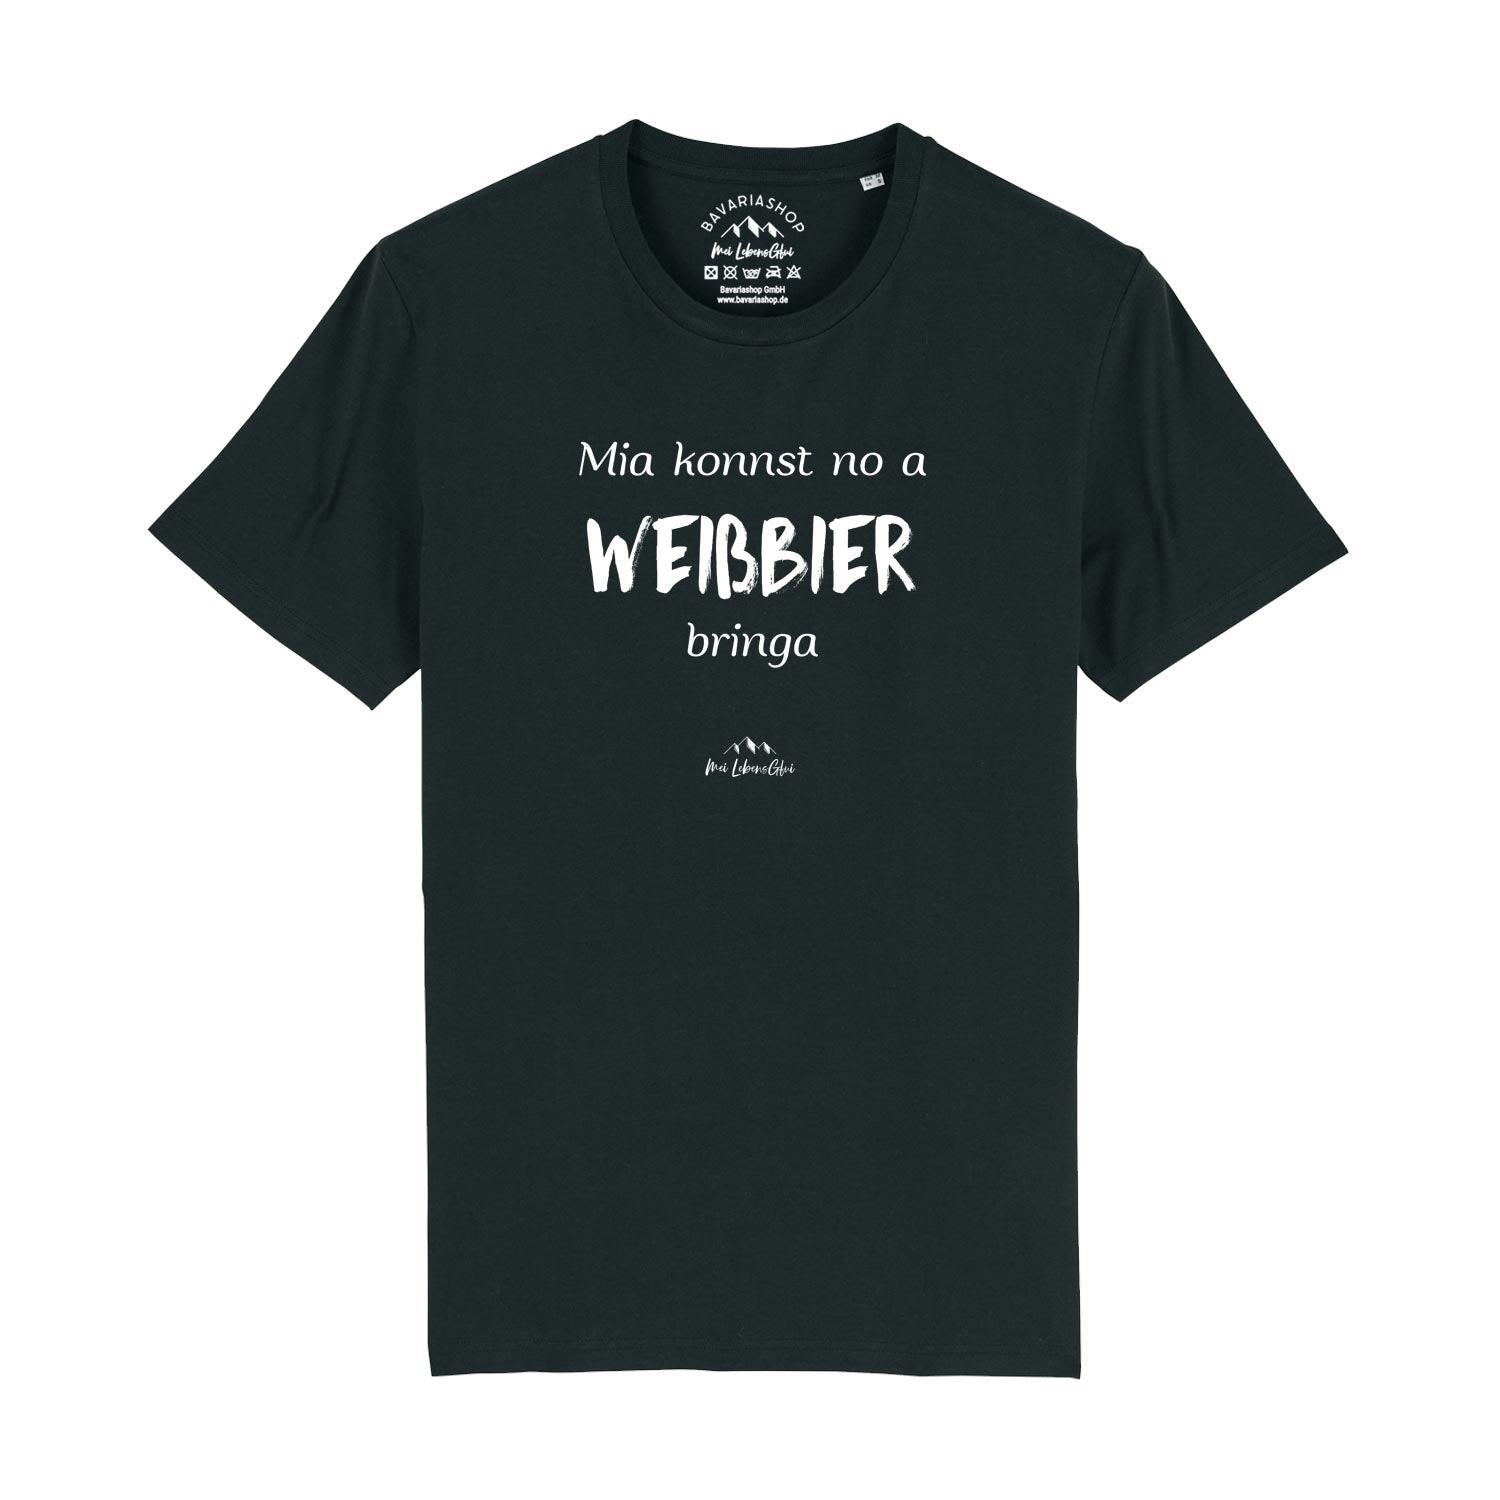 Herren T-Shirt "Mia konnst no a Weißbier bringa" - bavariashop - mei LebensGfui